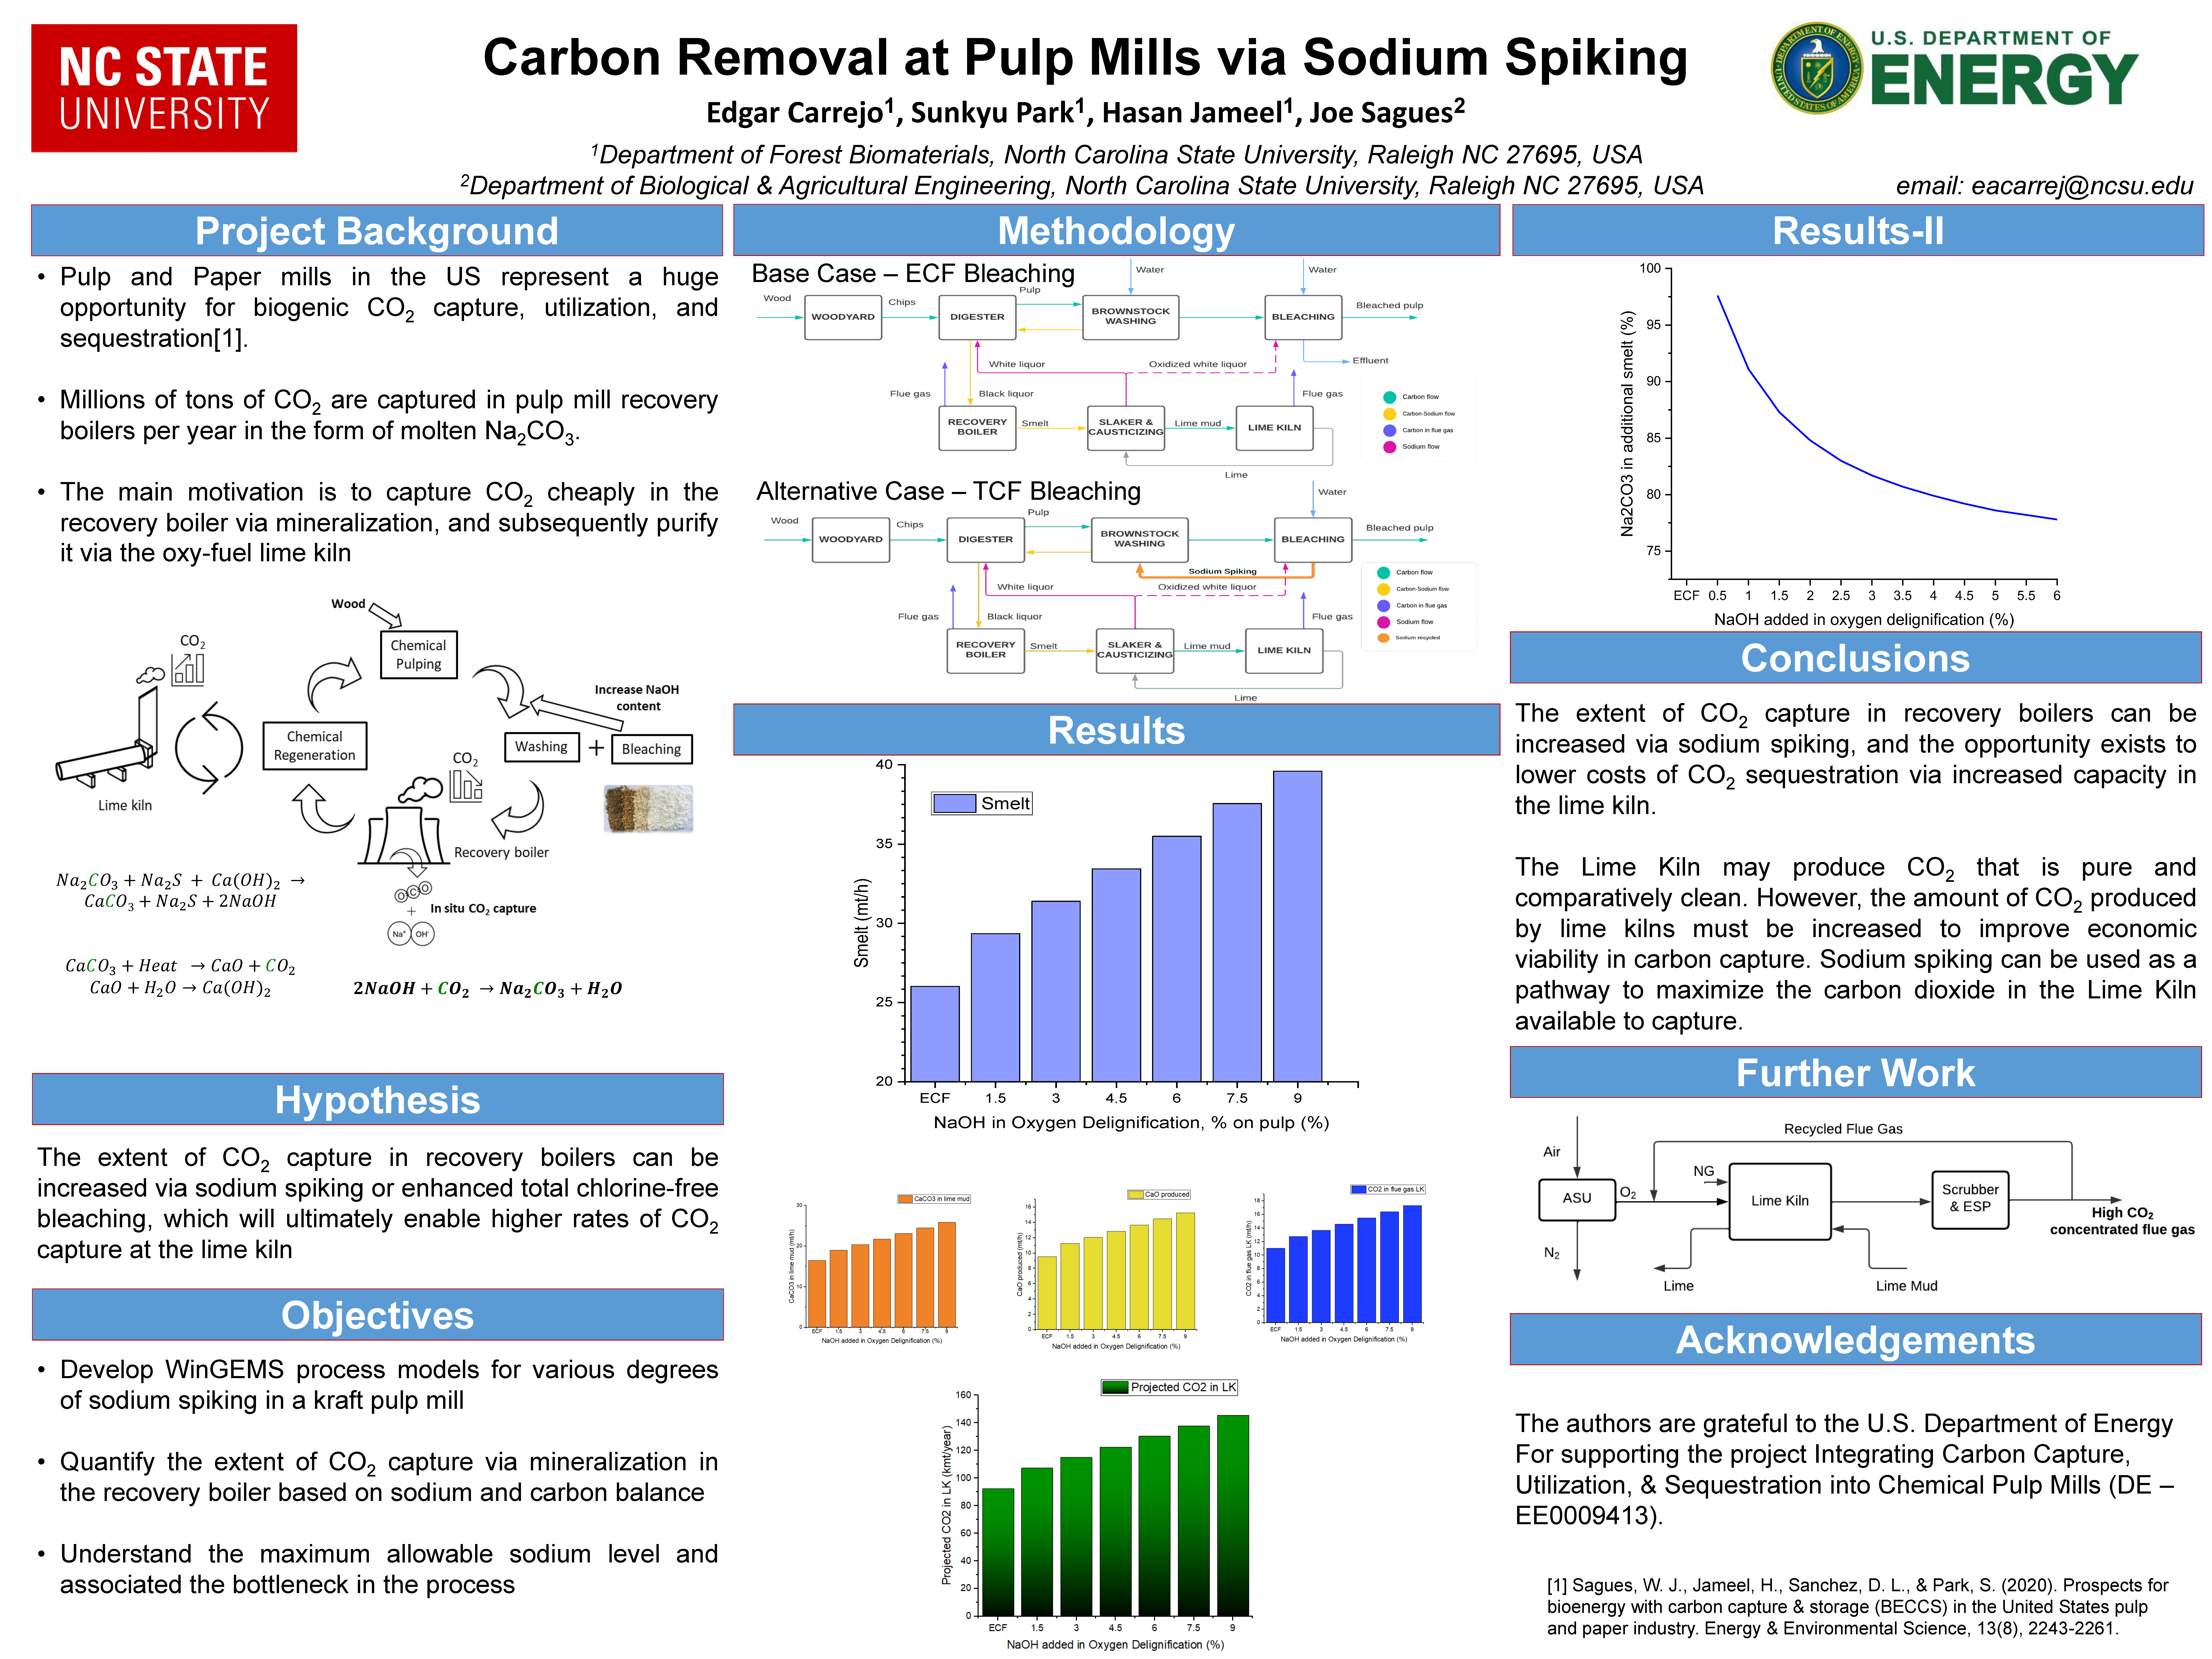 image of Edgar Carrejo's poster, "Carbon Removal at Pulp Mills via Sodium Spiking"